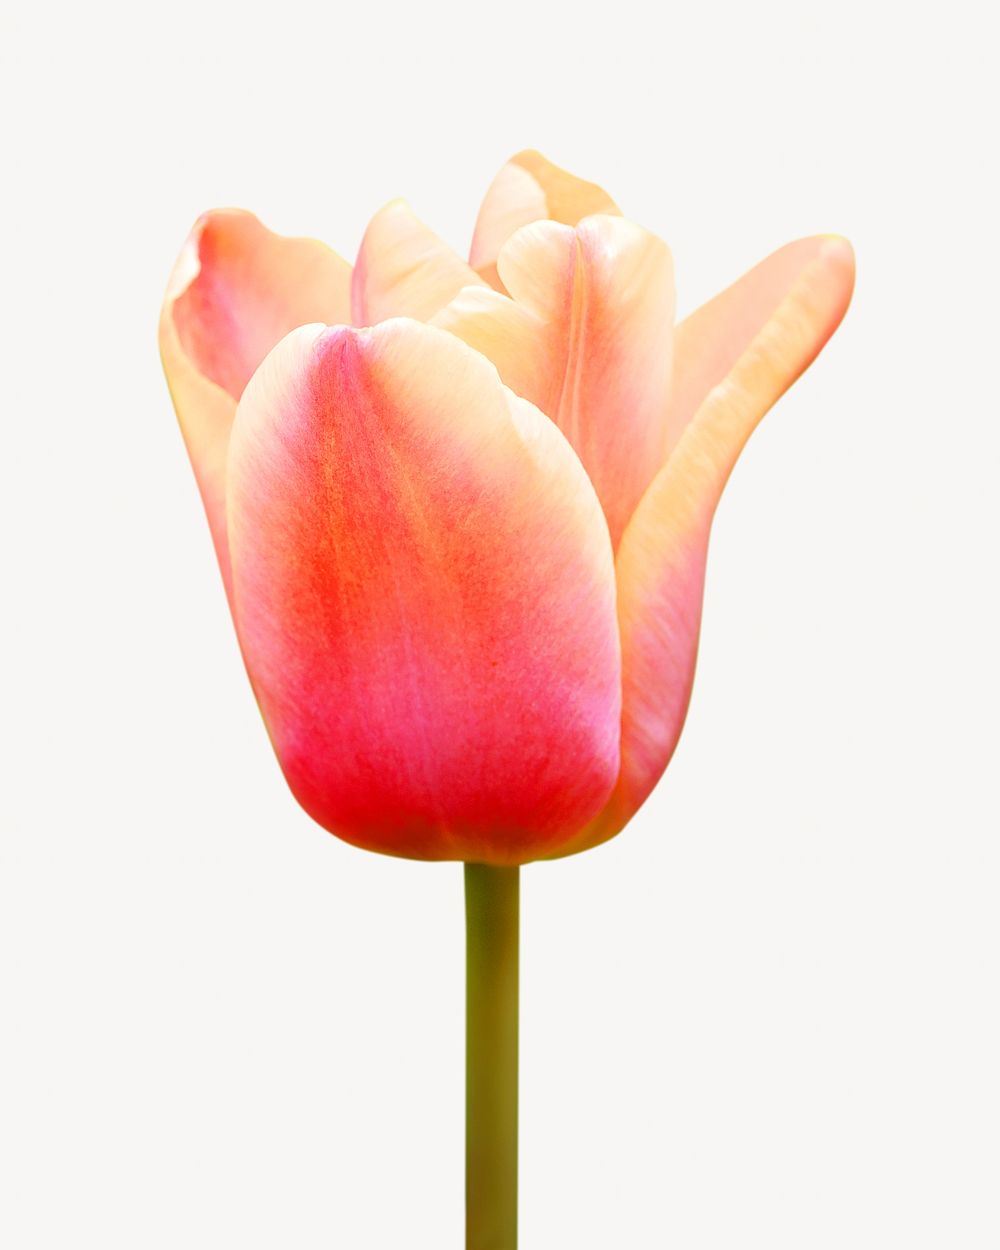 Pink summer tulip  isolated image on white